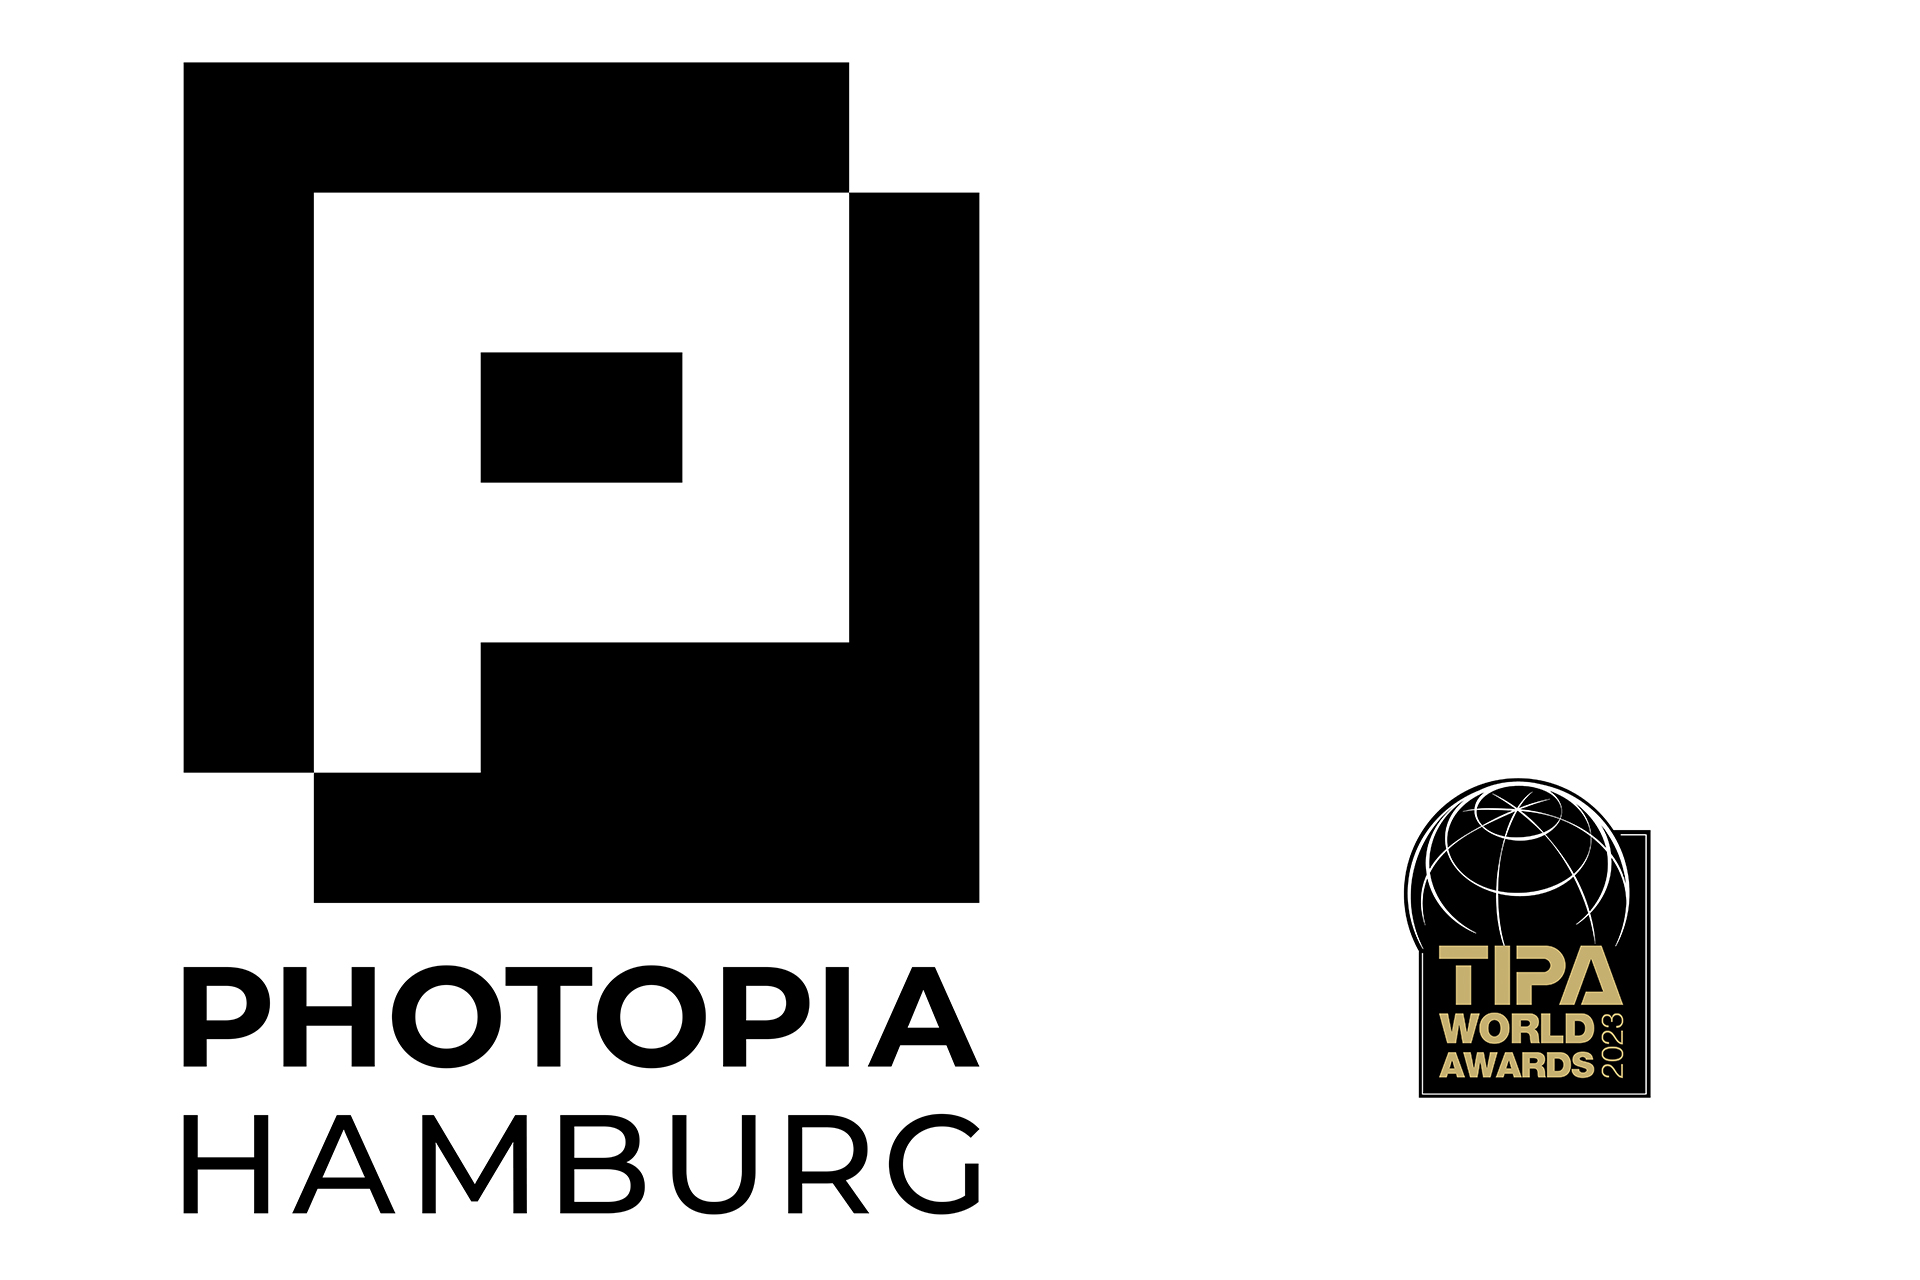 PHOTOPIA Hamburg – „Best Photo Event“